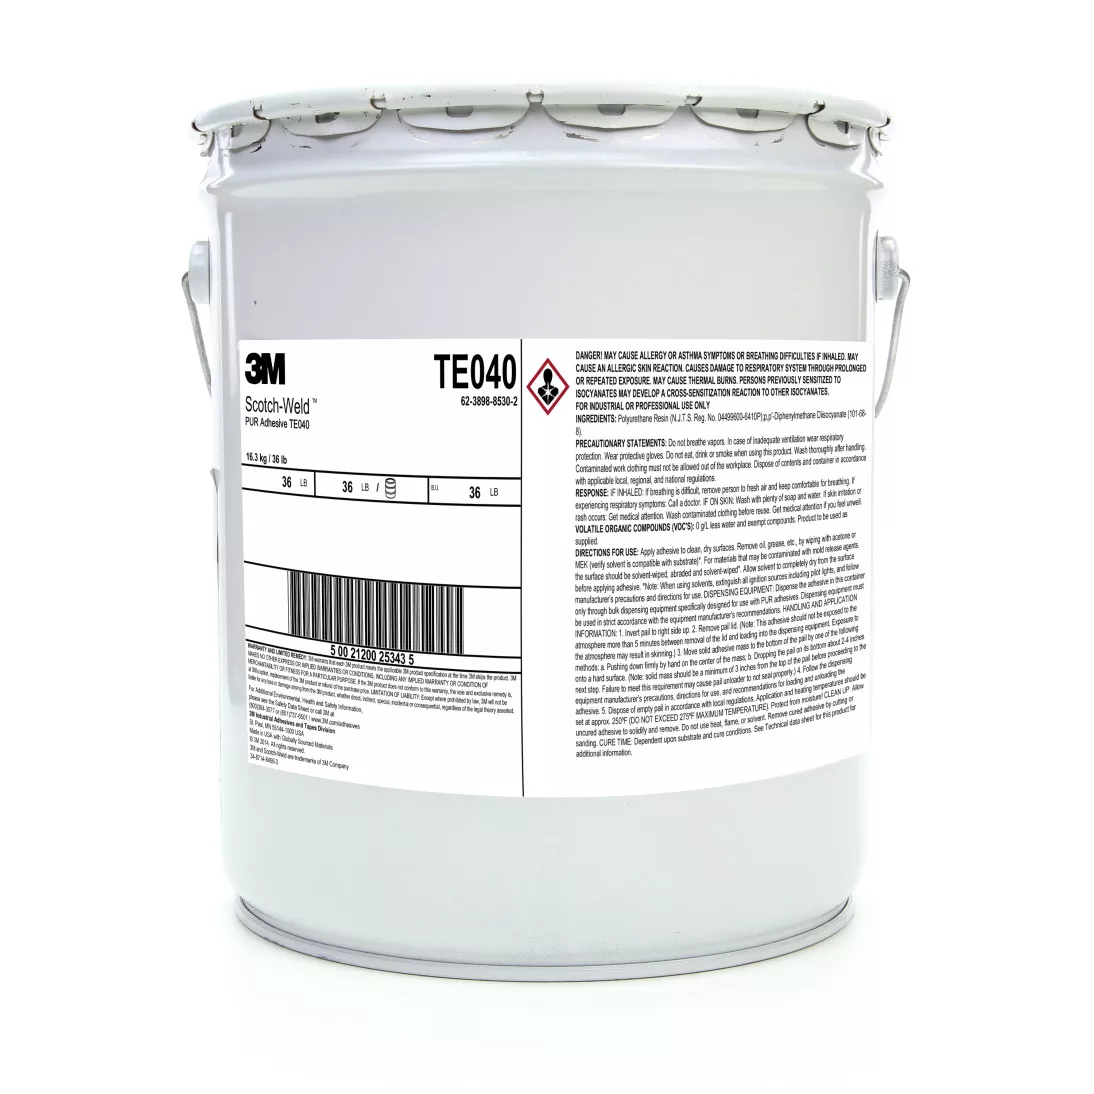 3M™ Scotch-Weld™ PUR Adhesive TE040, Off-White, 5 Gallon Drum (36 lb),
1/Drum